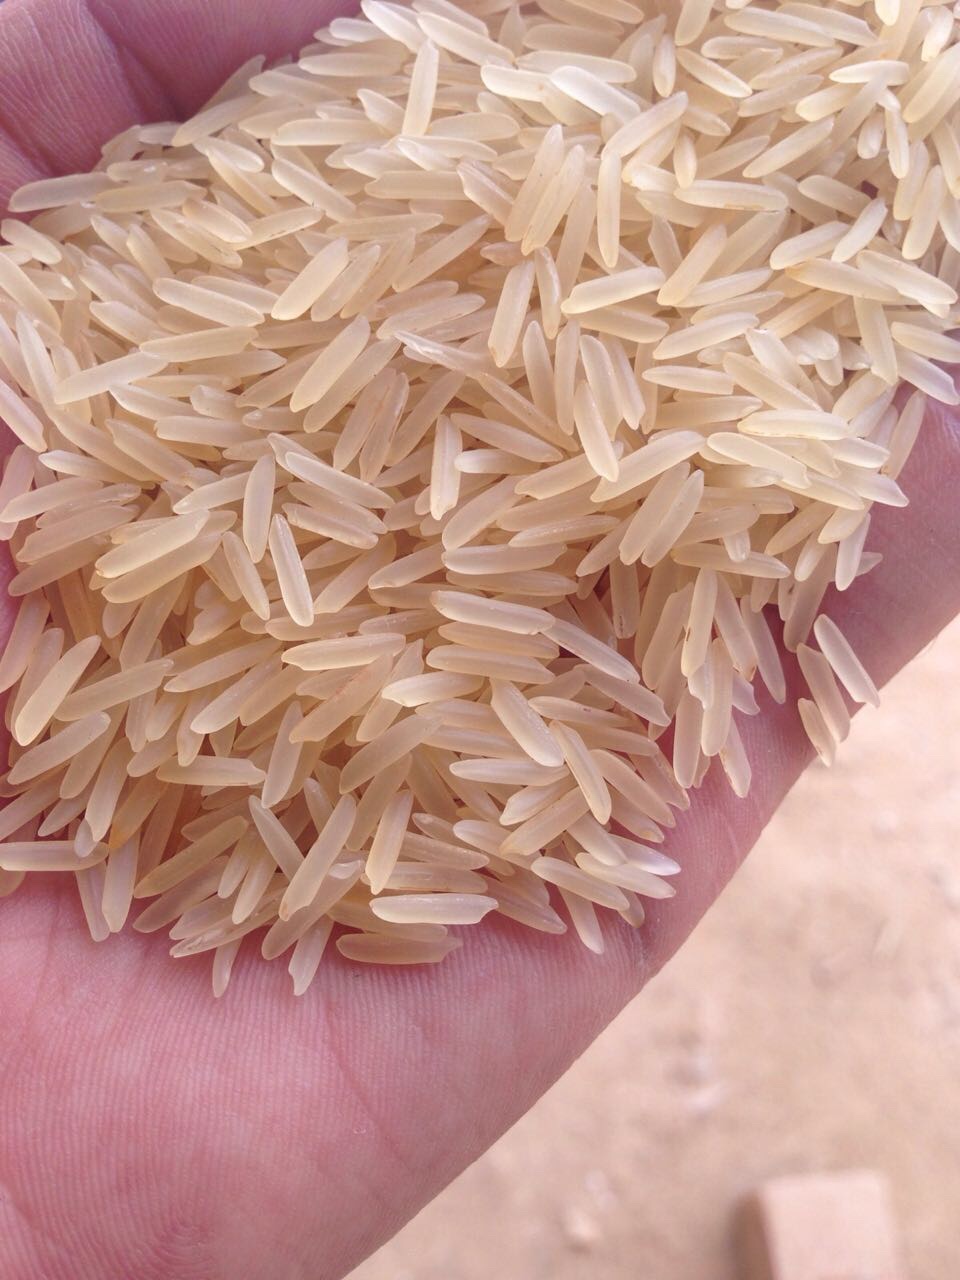 India Gloden Basmati Rice